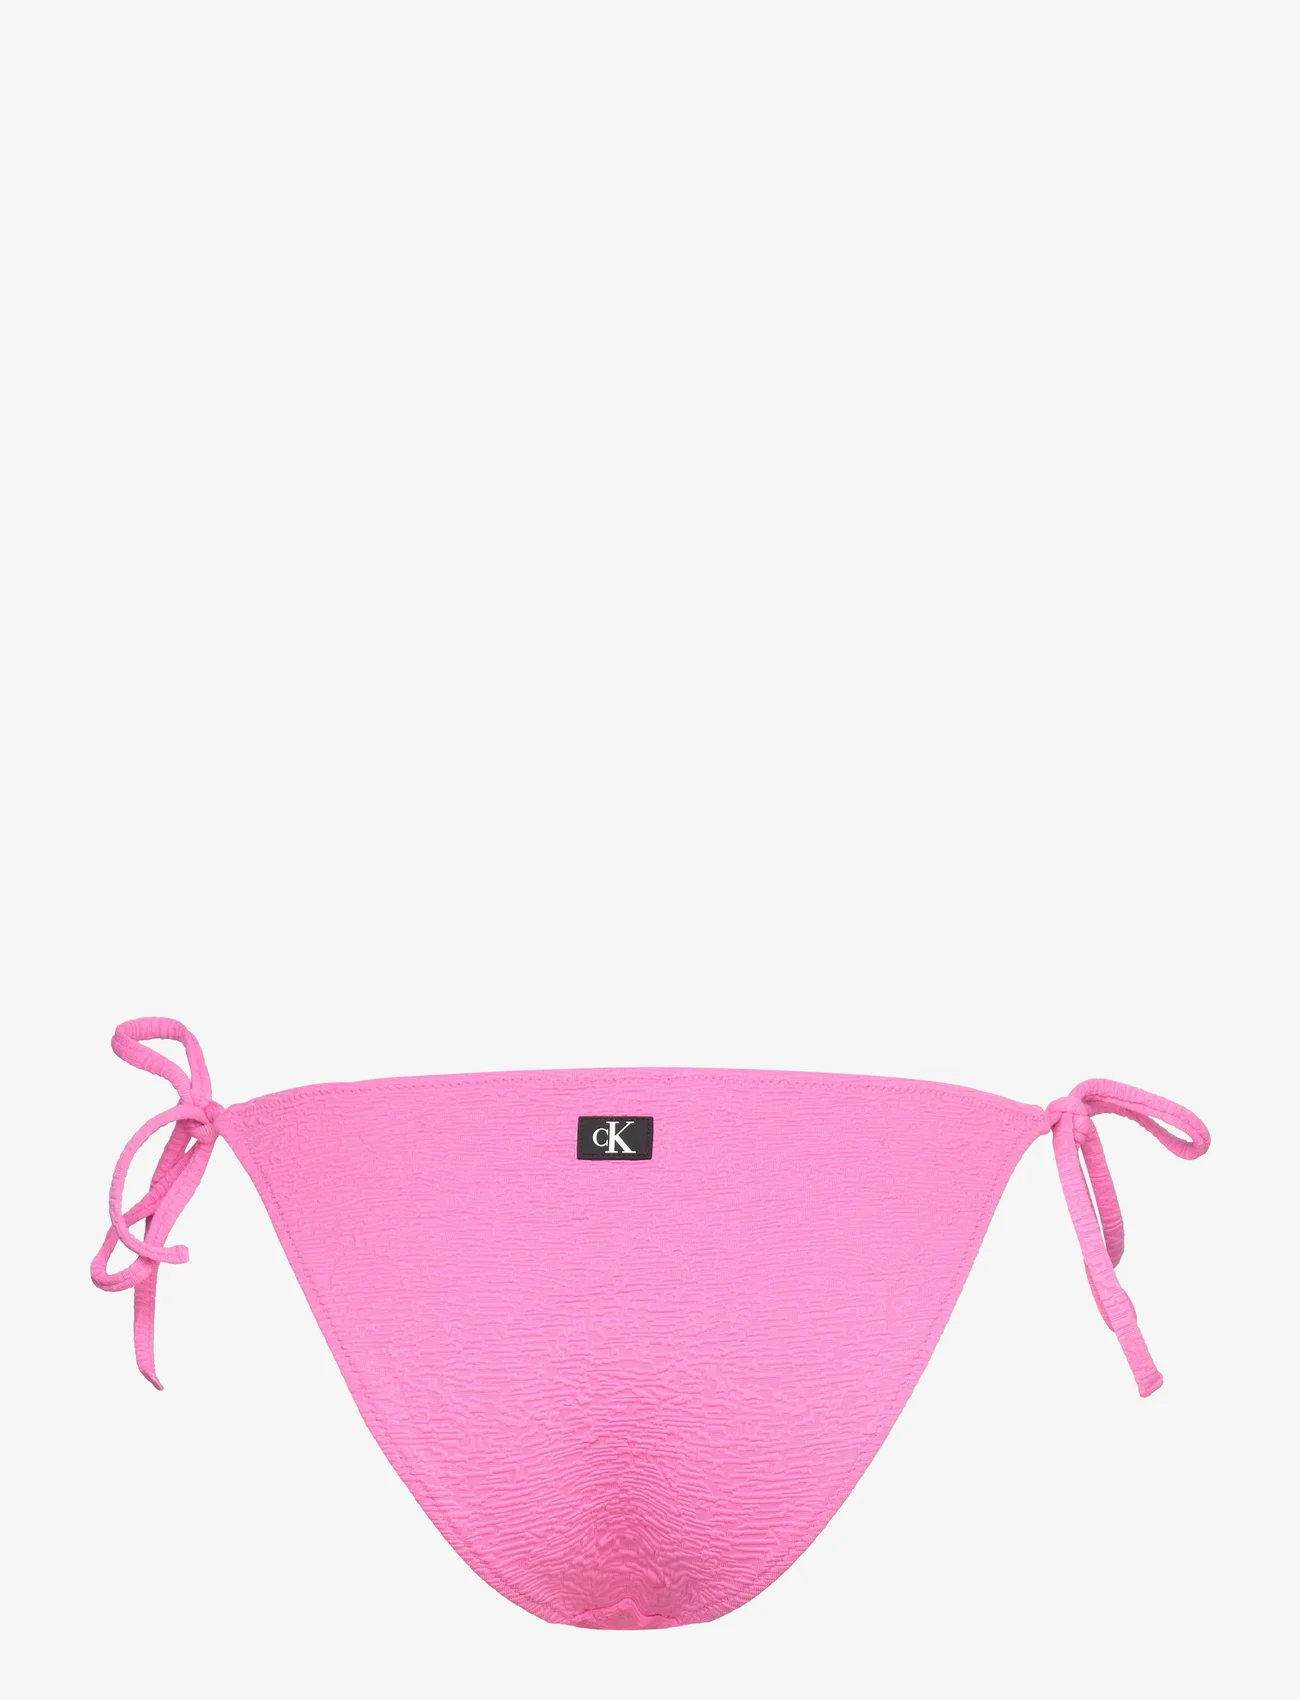 Calvin Klein - STRING SIDE TIE BIKINI - side tie bikinis - bold pink - 1